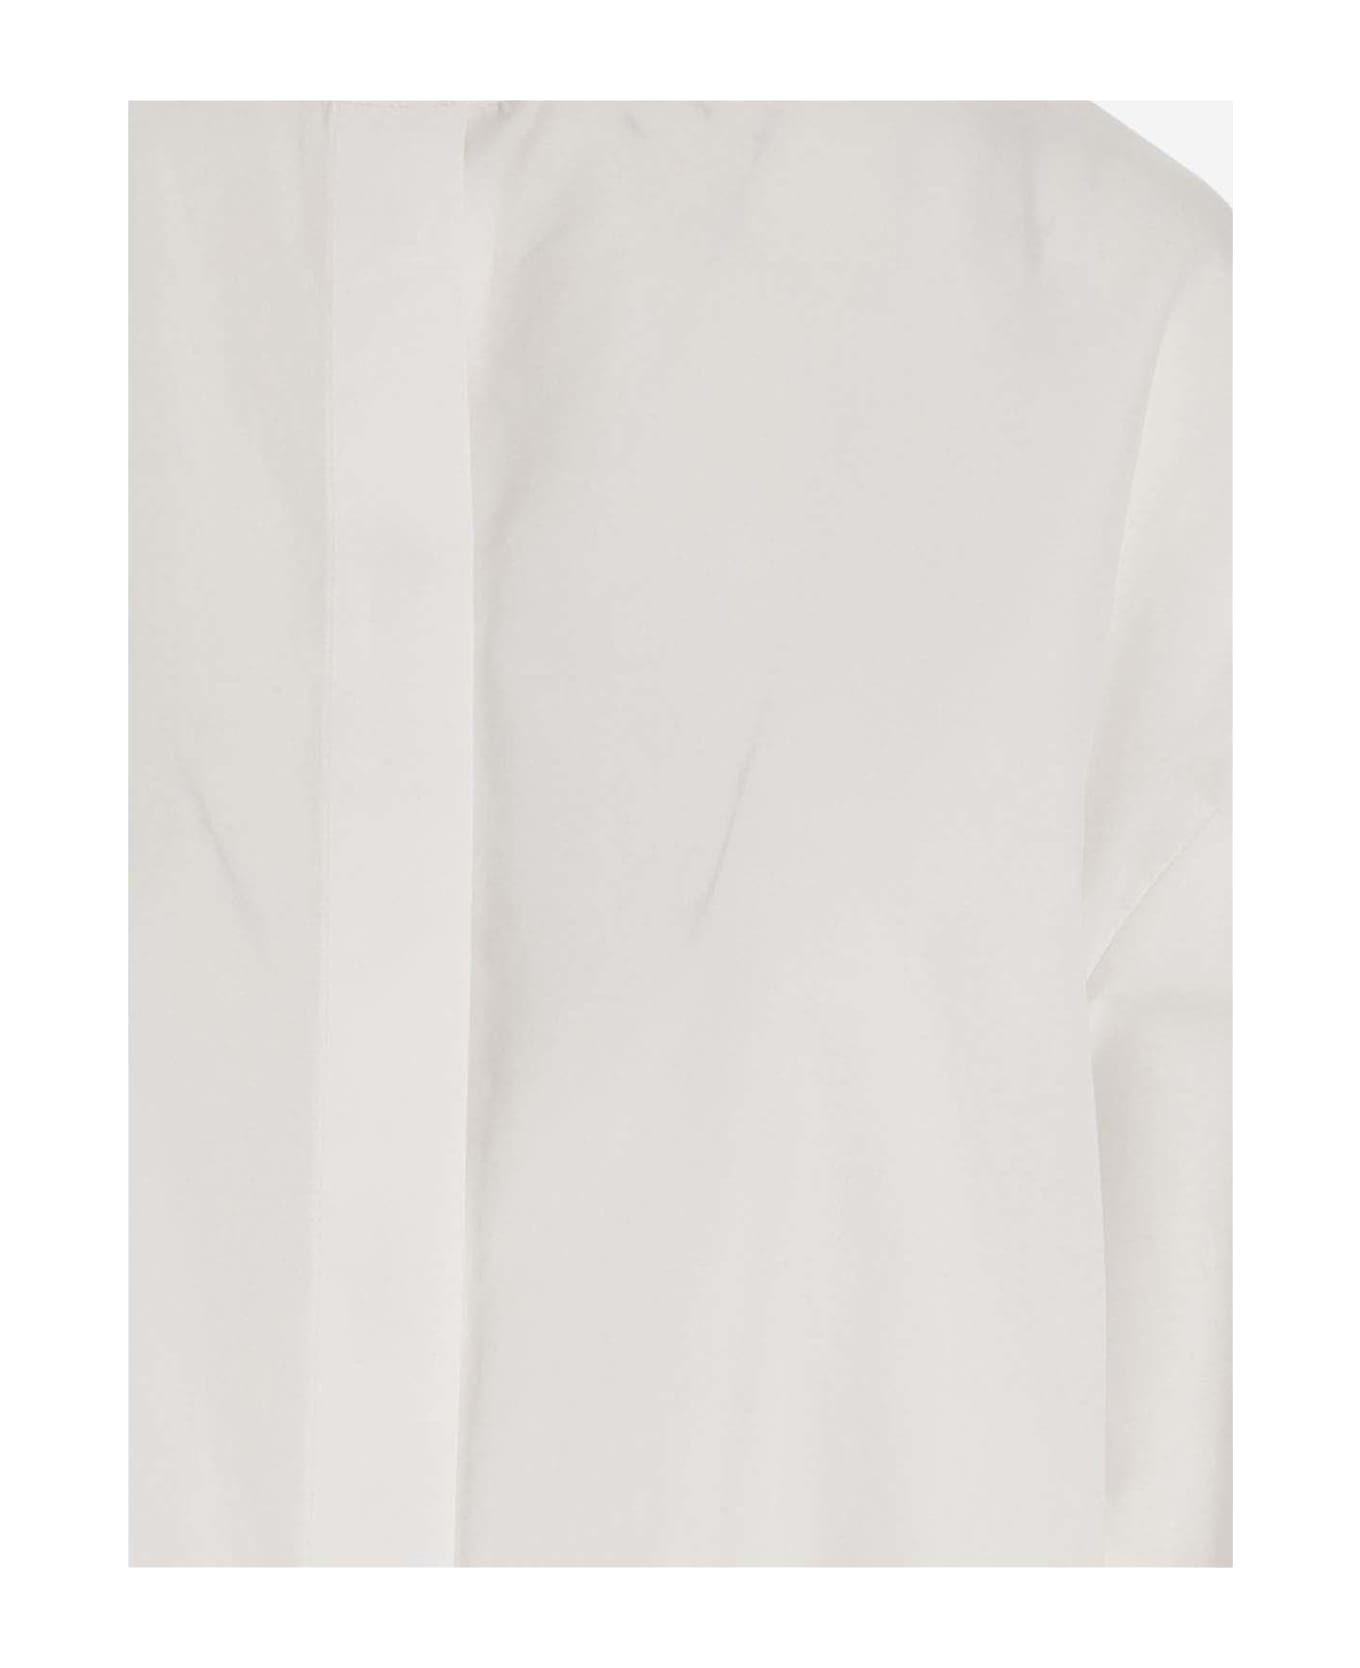 Aspesi Cotton Shirt - Bianco